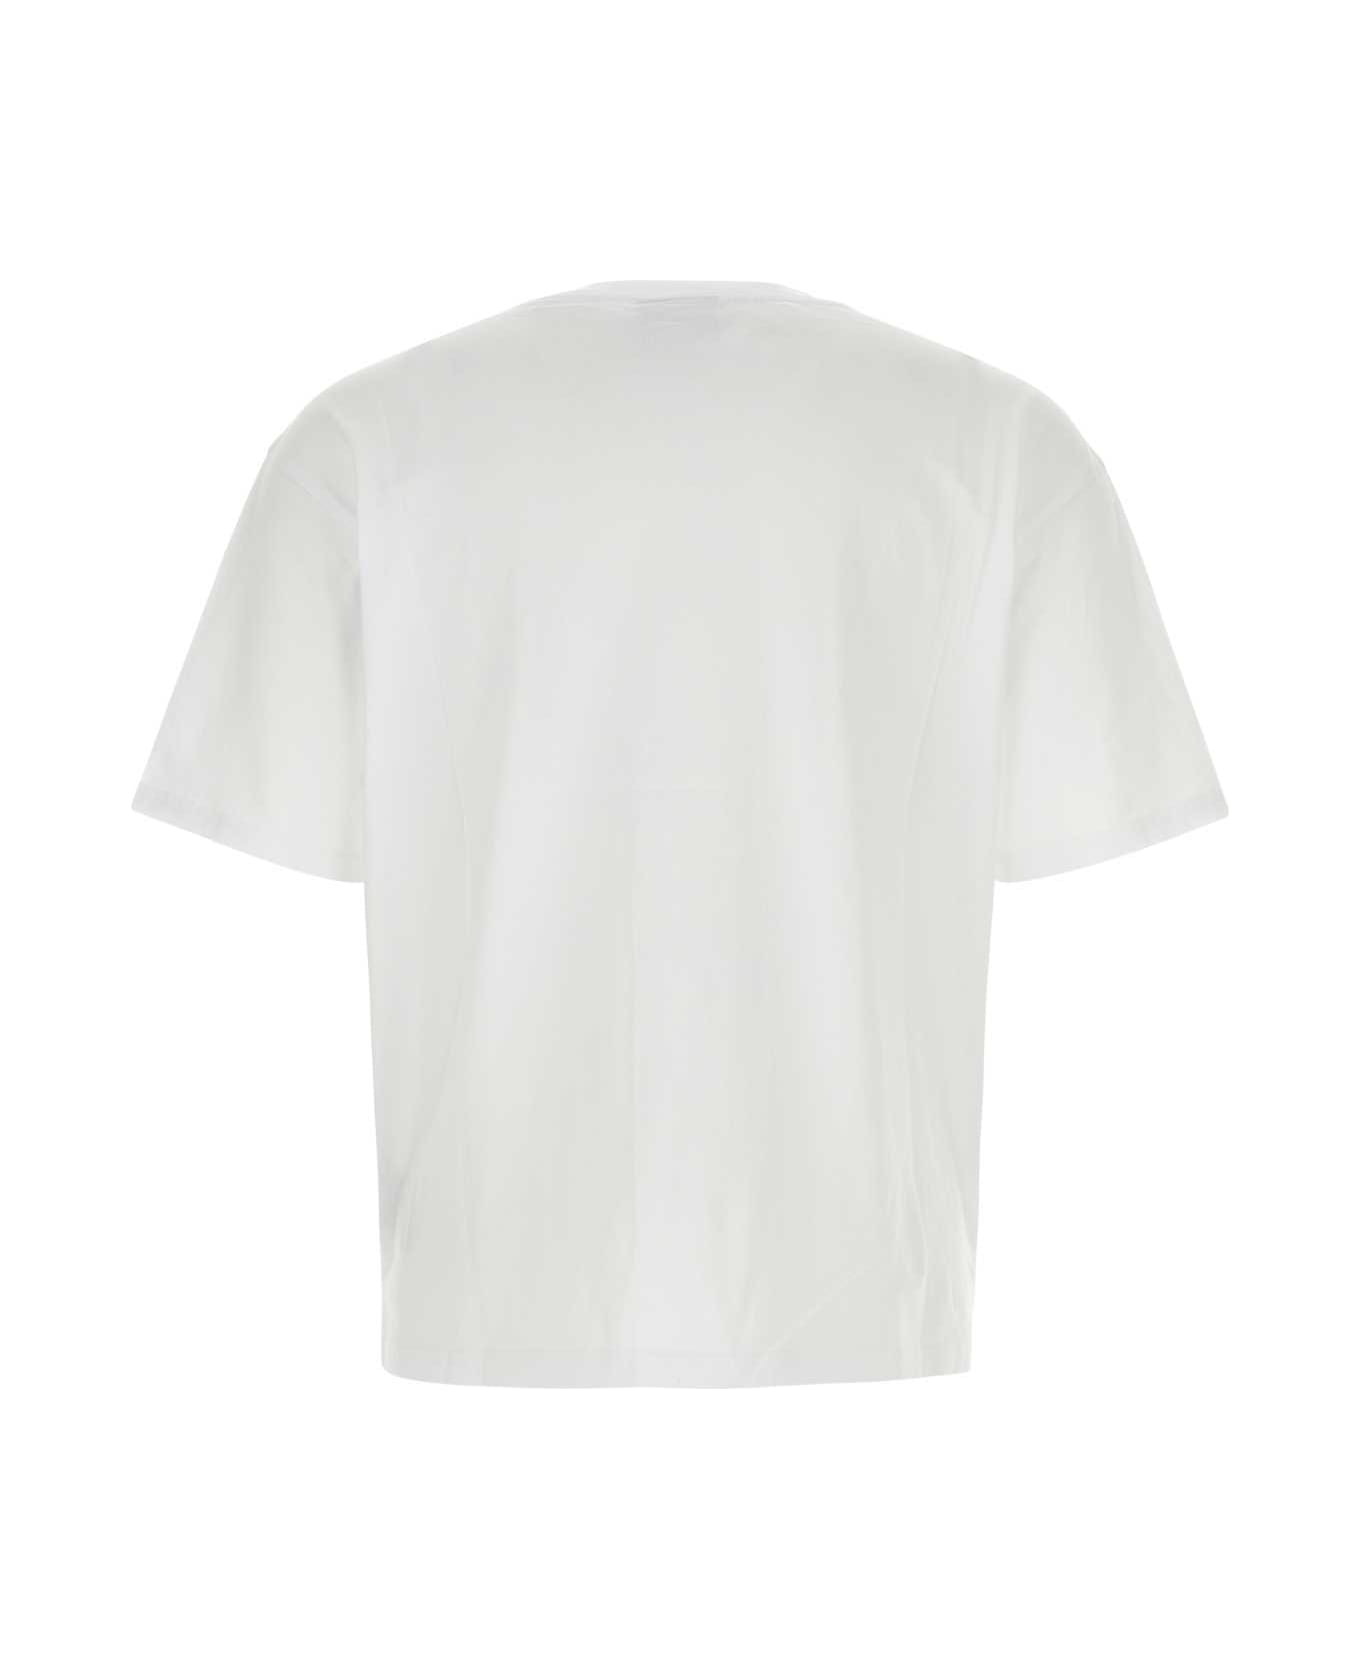 Bluemarble White Cotton T-shirt - WHT